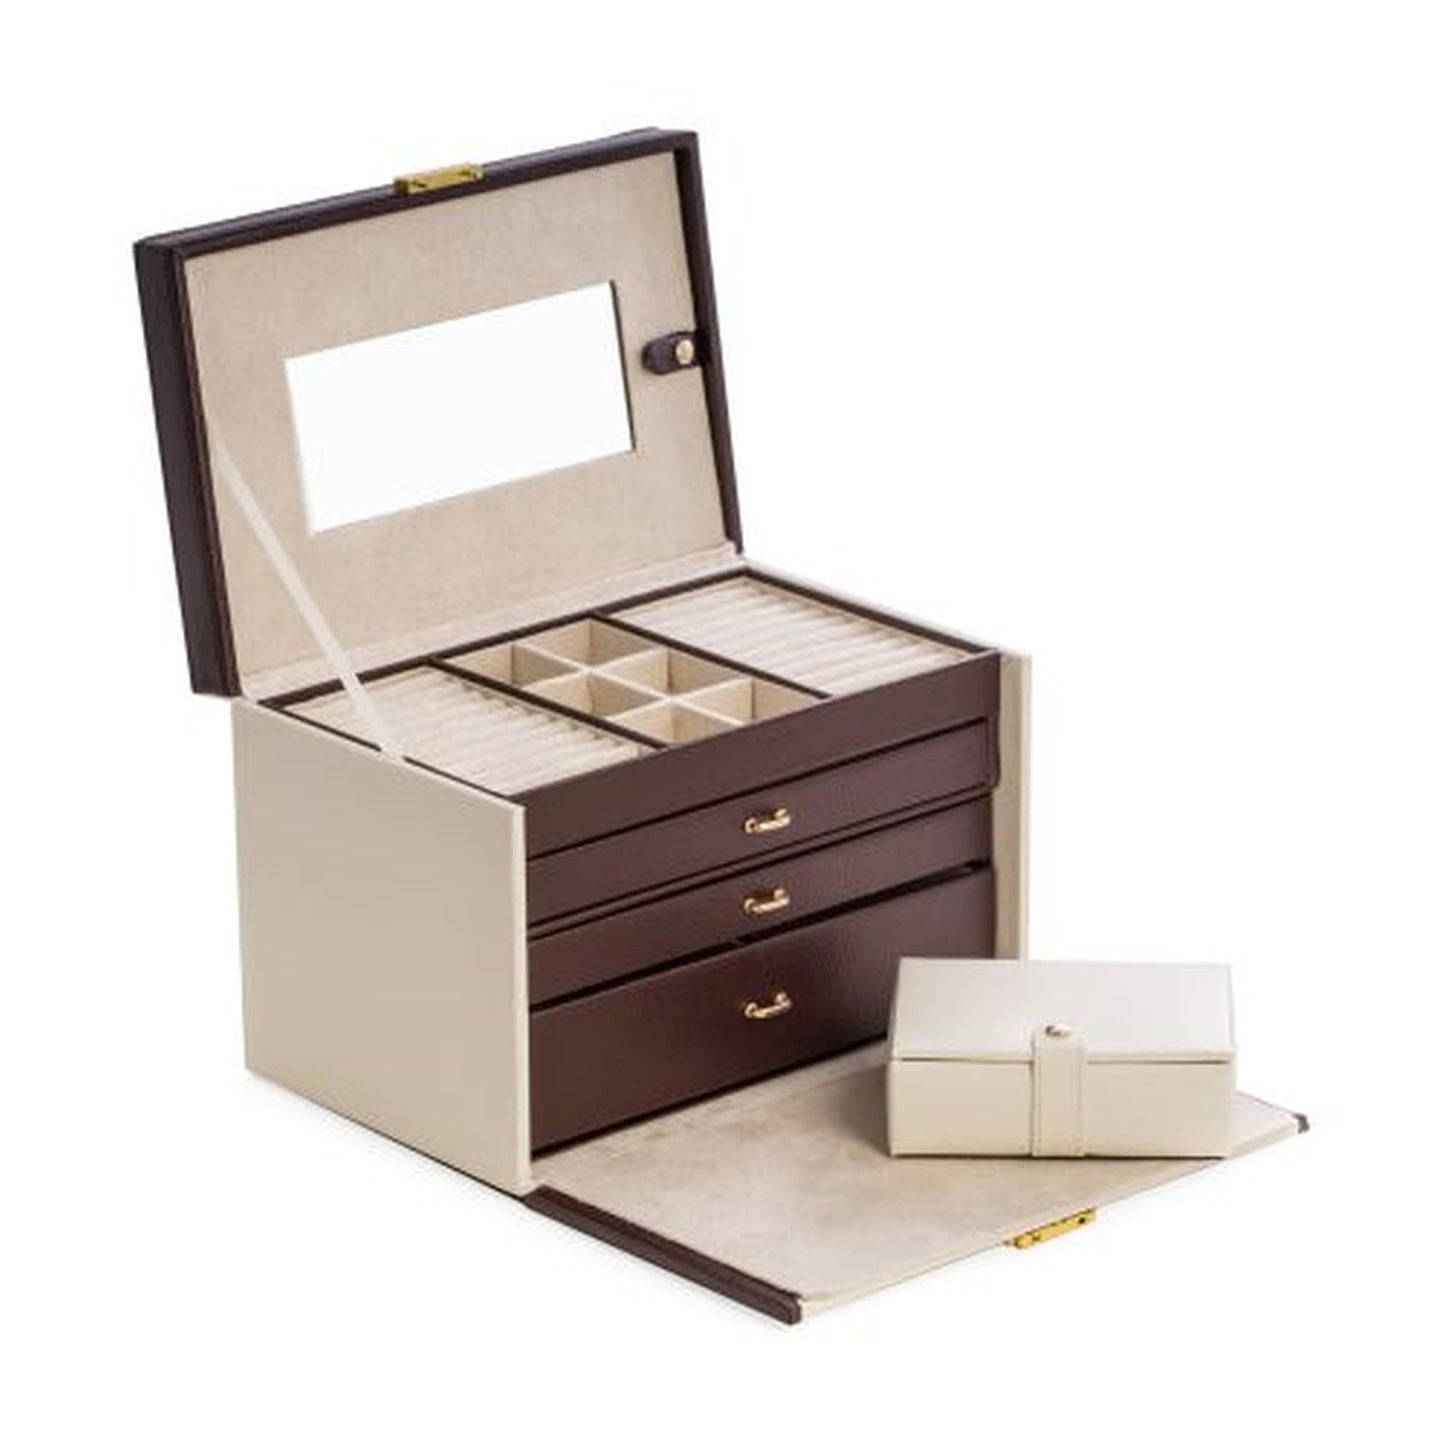 Bey Berk Ivory & Brown Leather 4 Level Jewelry Box